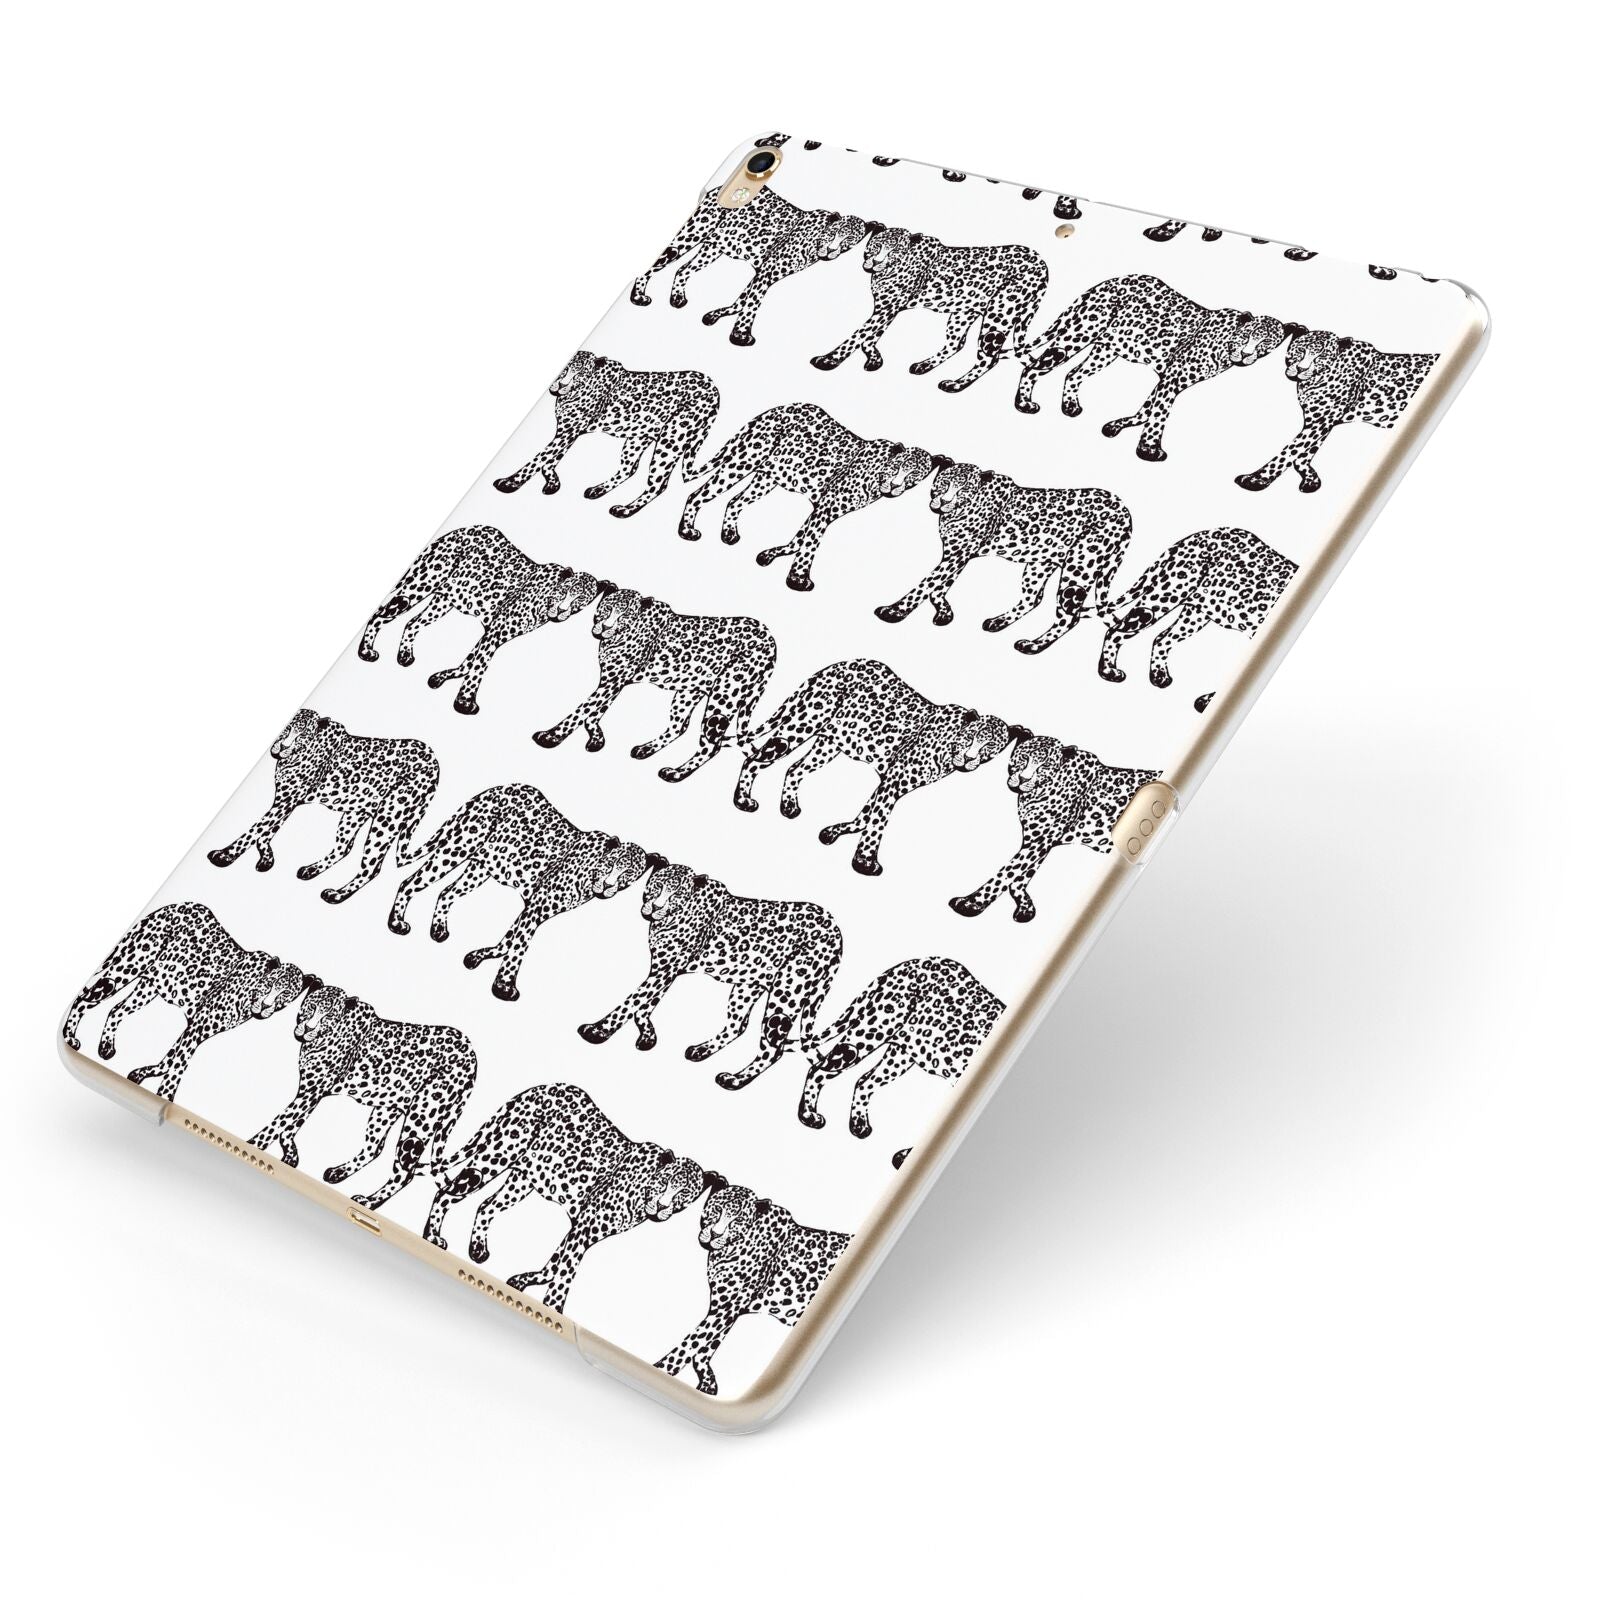 Monochrome Mirrored Leopard Print Apple iPad Case on Gold iPad Side View